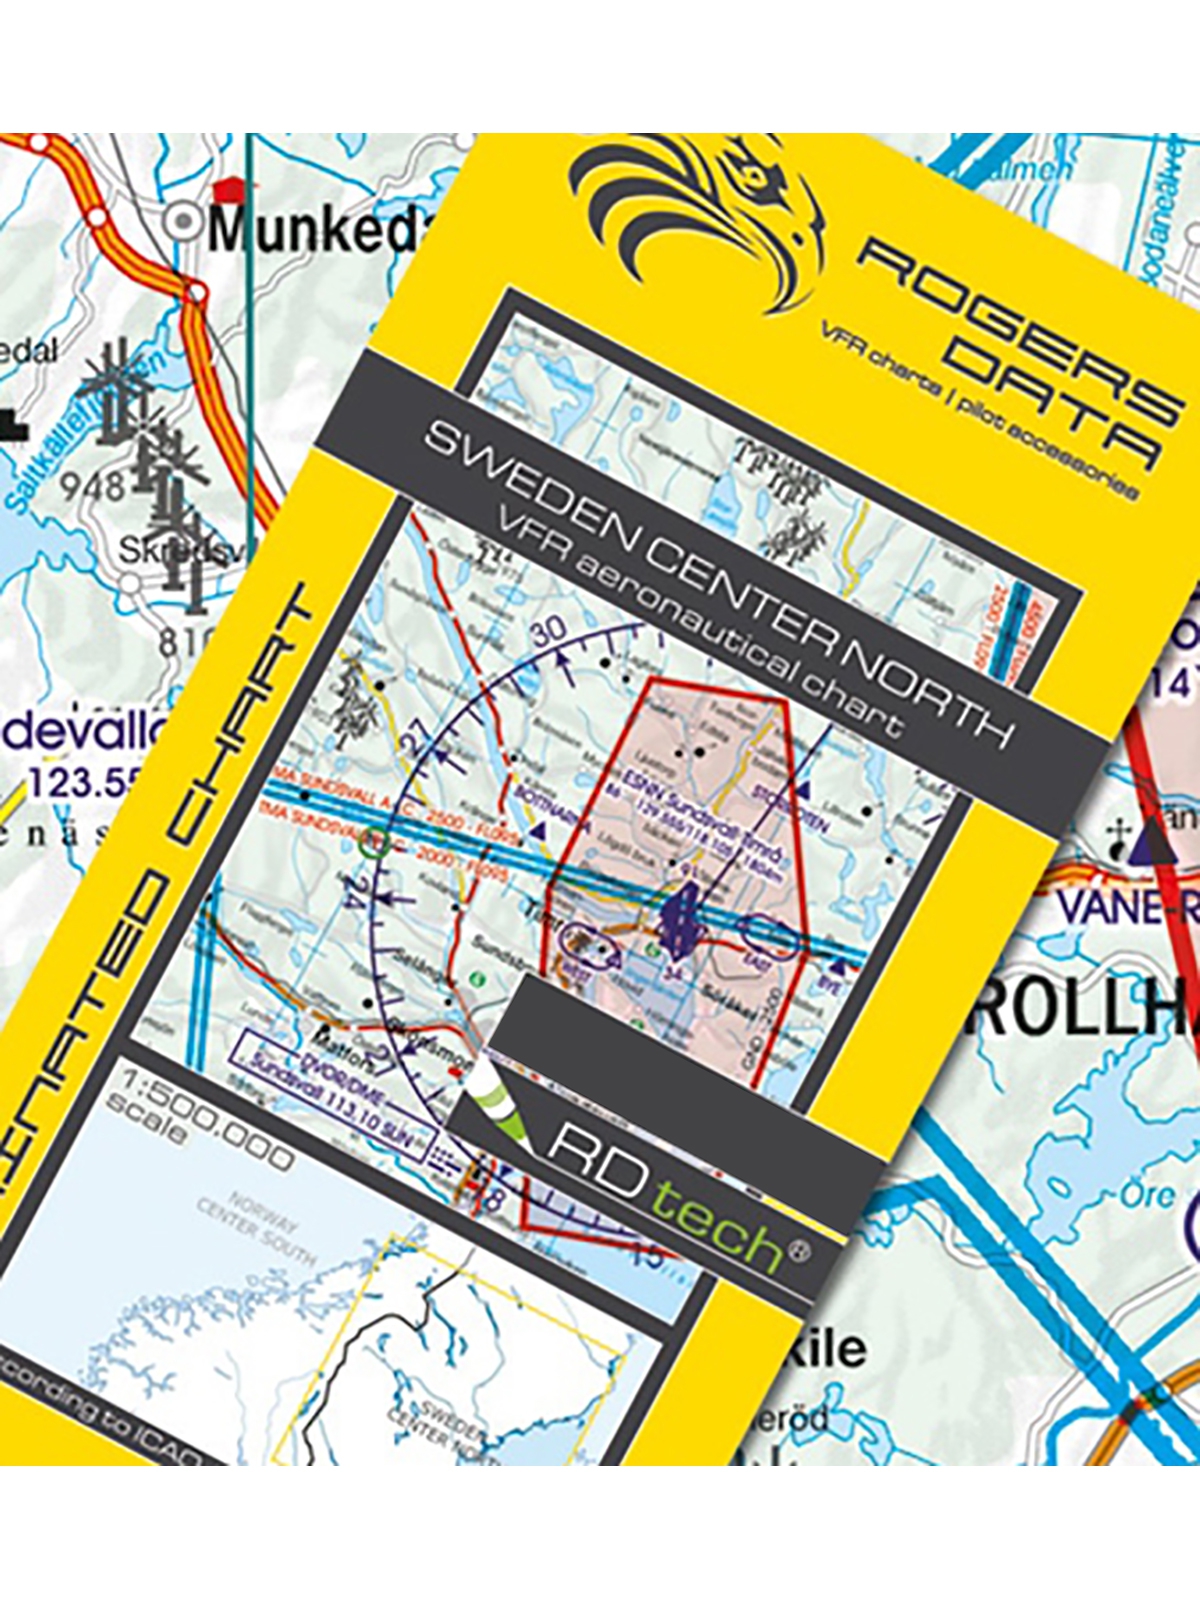 Sweden Center North - Rogers Data VFR Chart, 1:500,000, laminated, folded